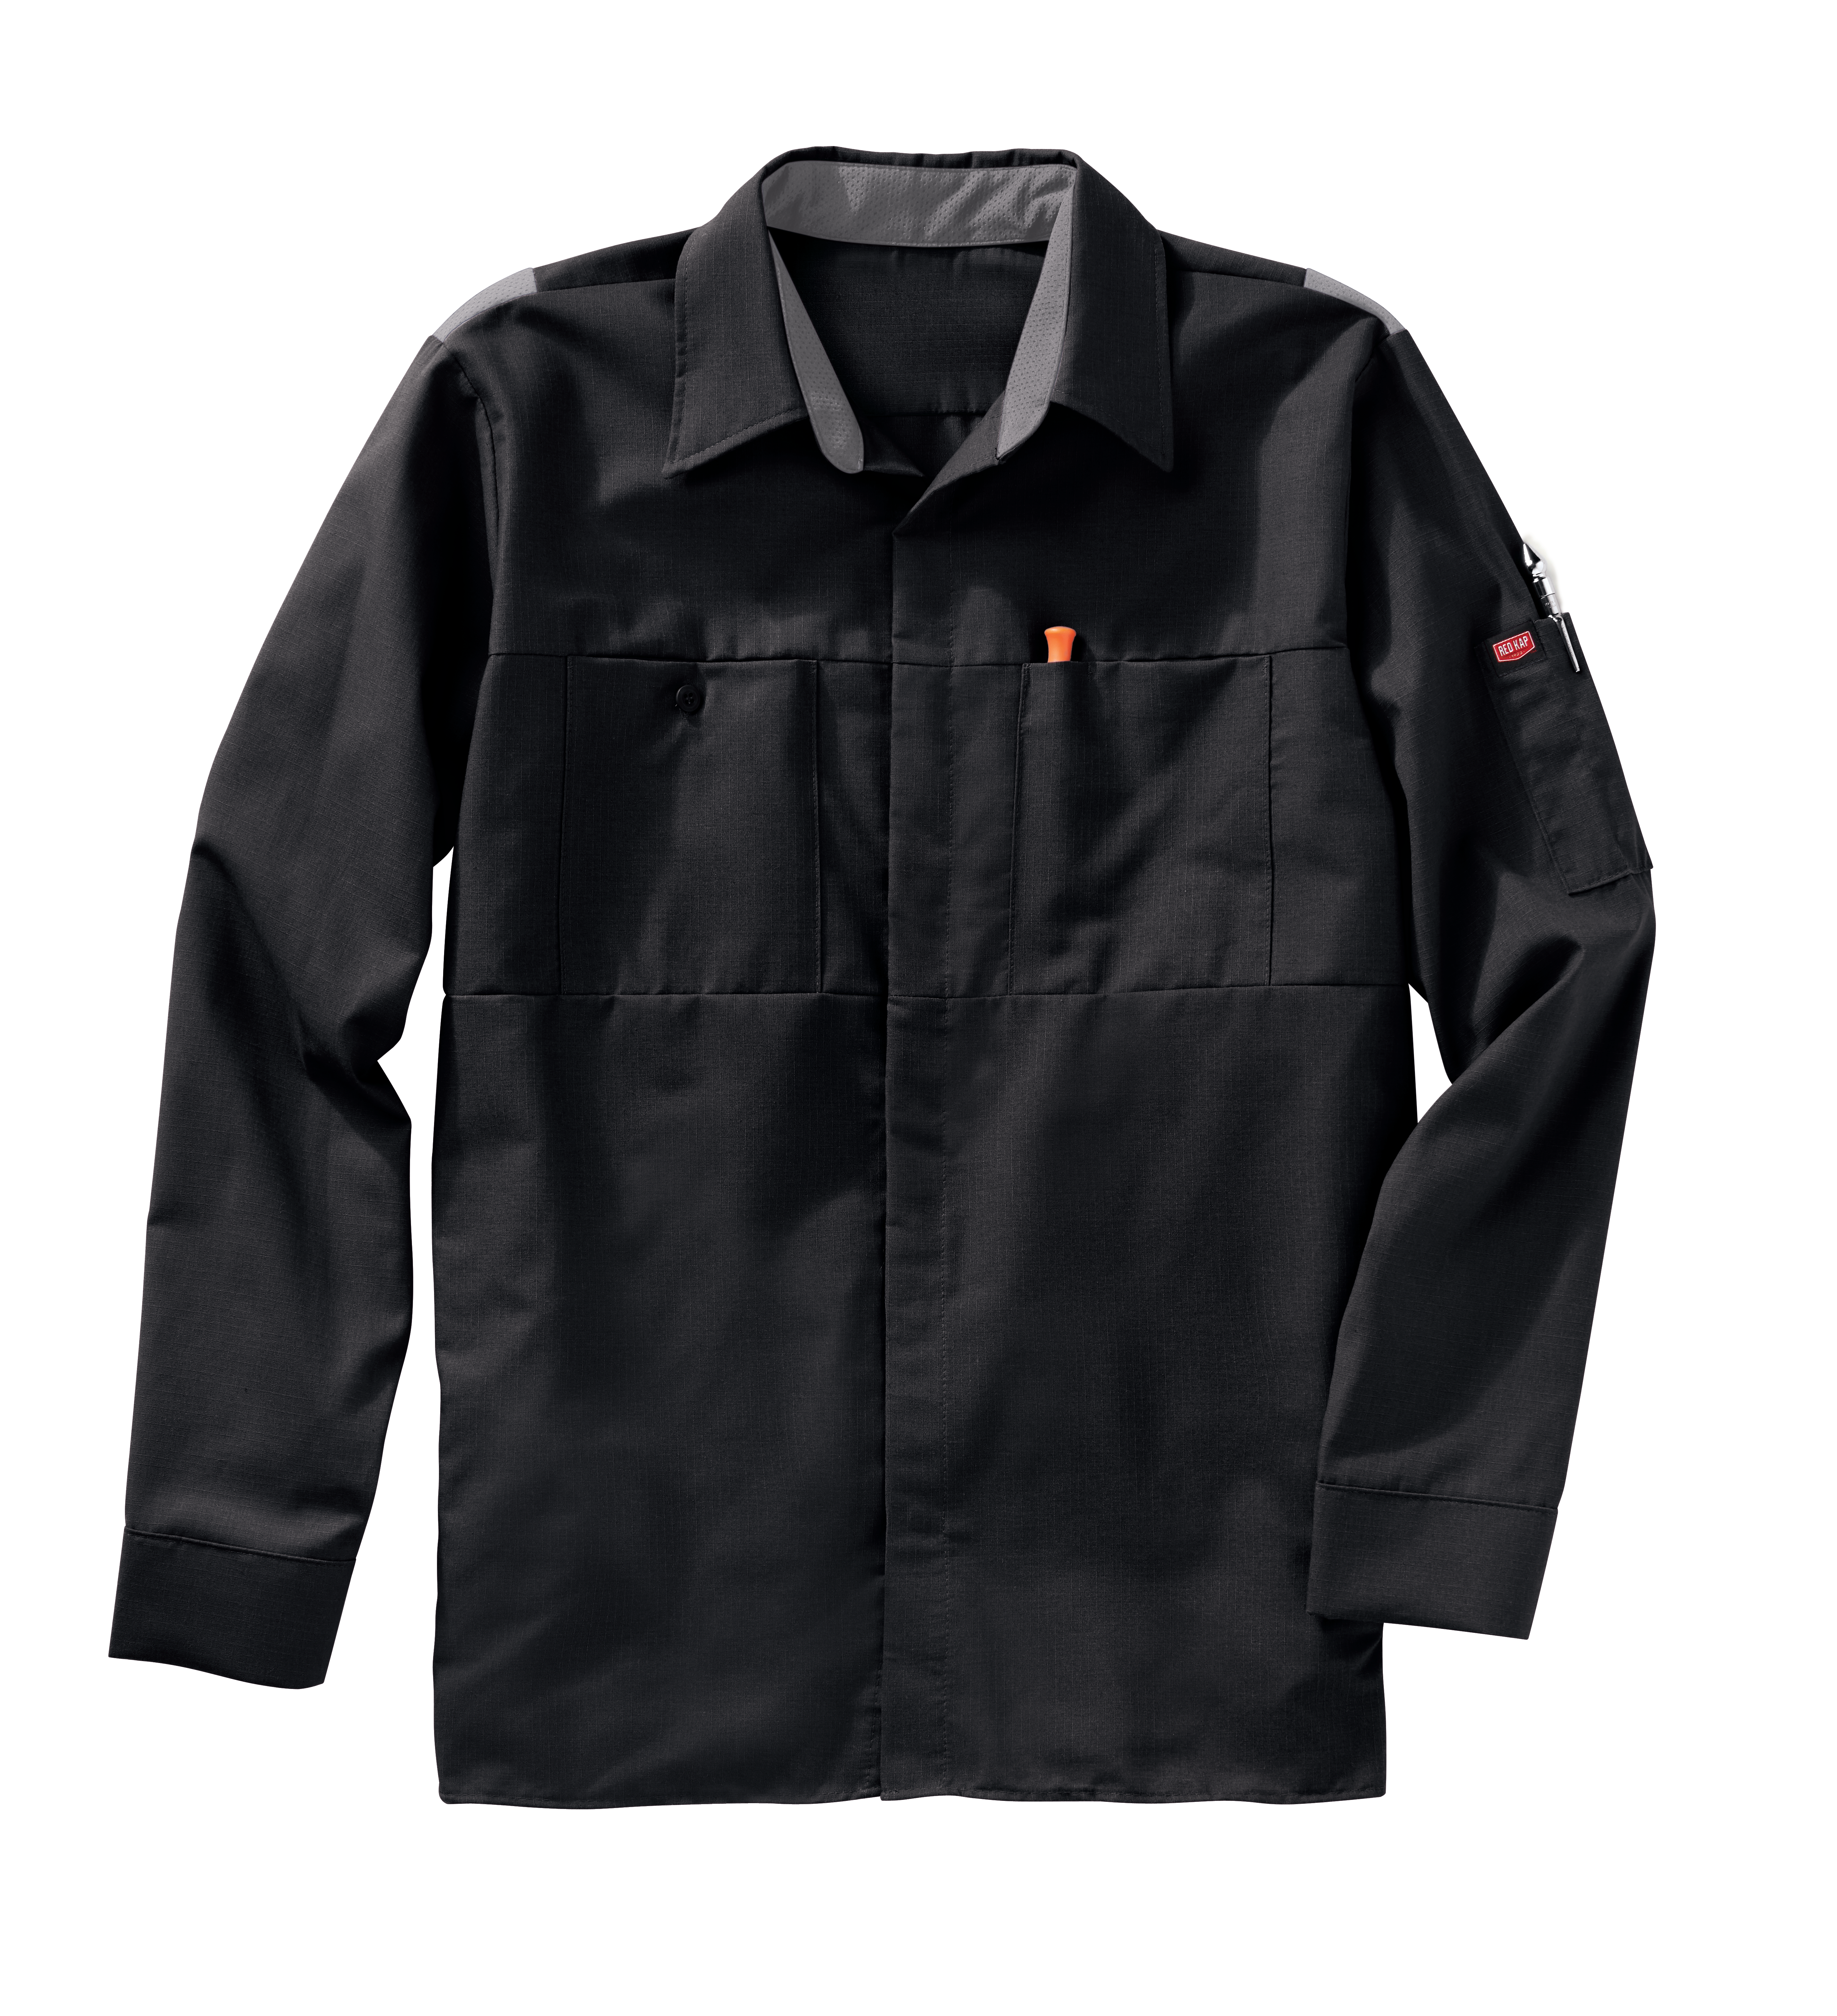 Red Kap Mens Performance Plus Shop Shirt with Oilblok Technology 